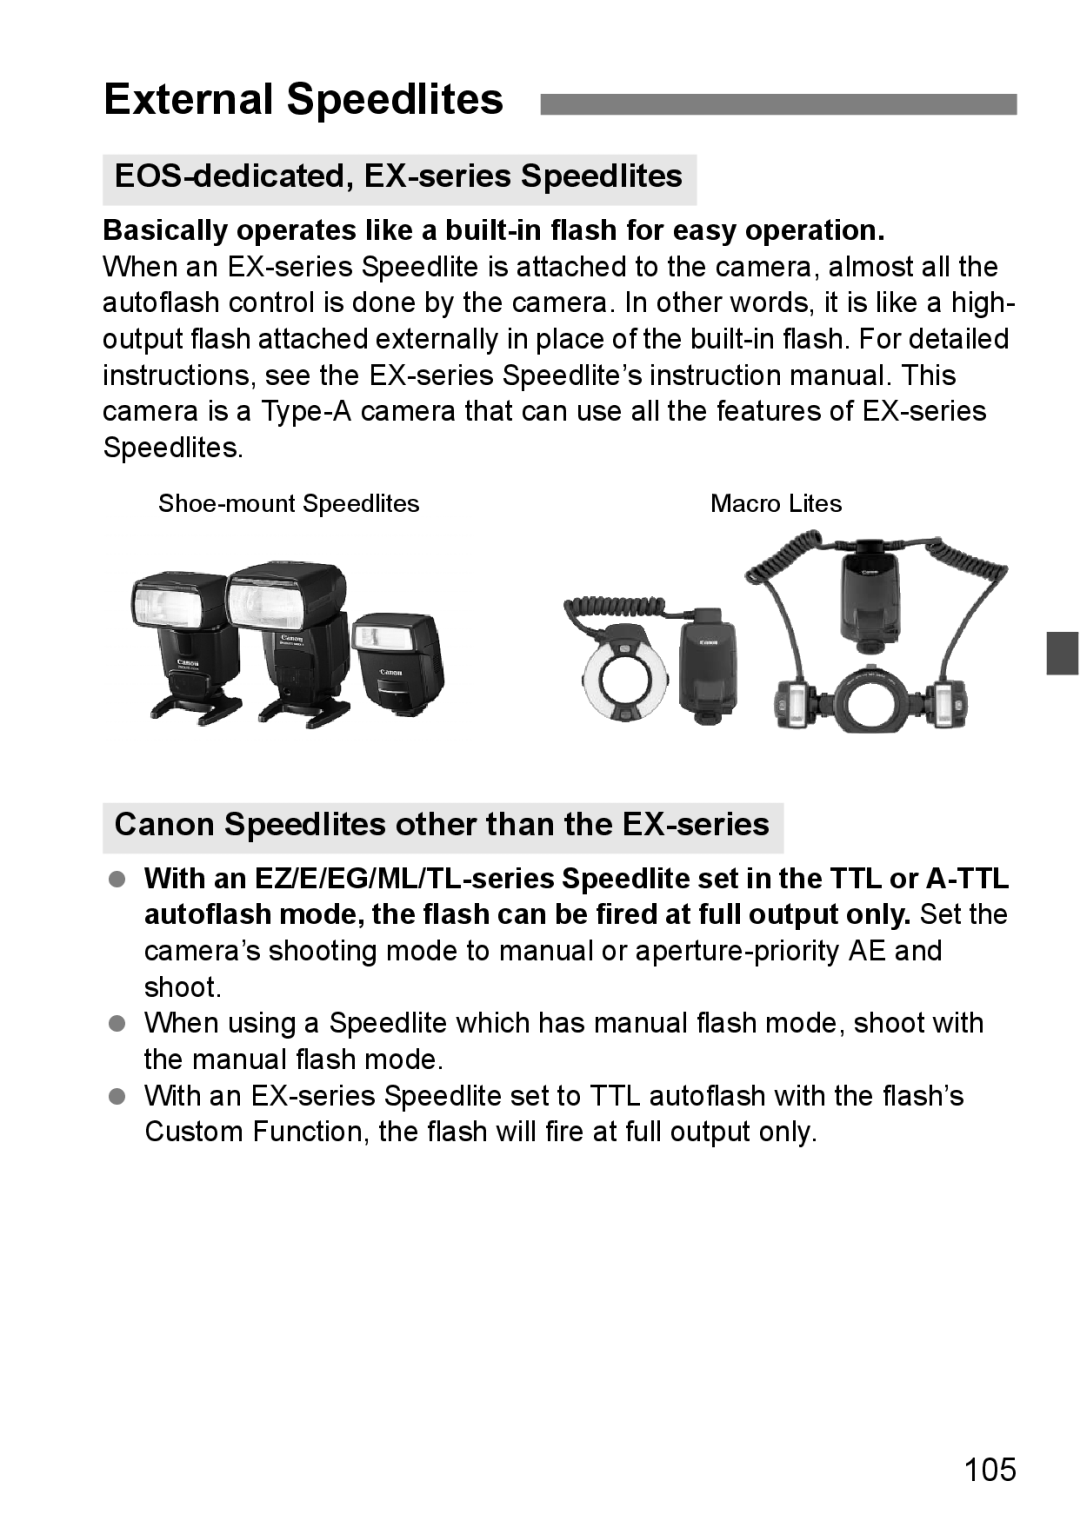 Canon EOS40D External Speedlites, EOS-dedicated, EX-series Speedlites, Canon Speedlites other than the EX-series, 105 